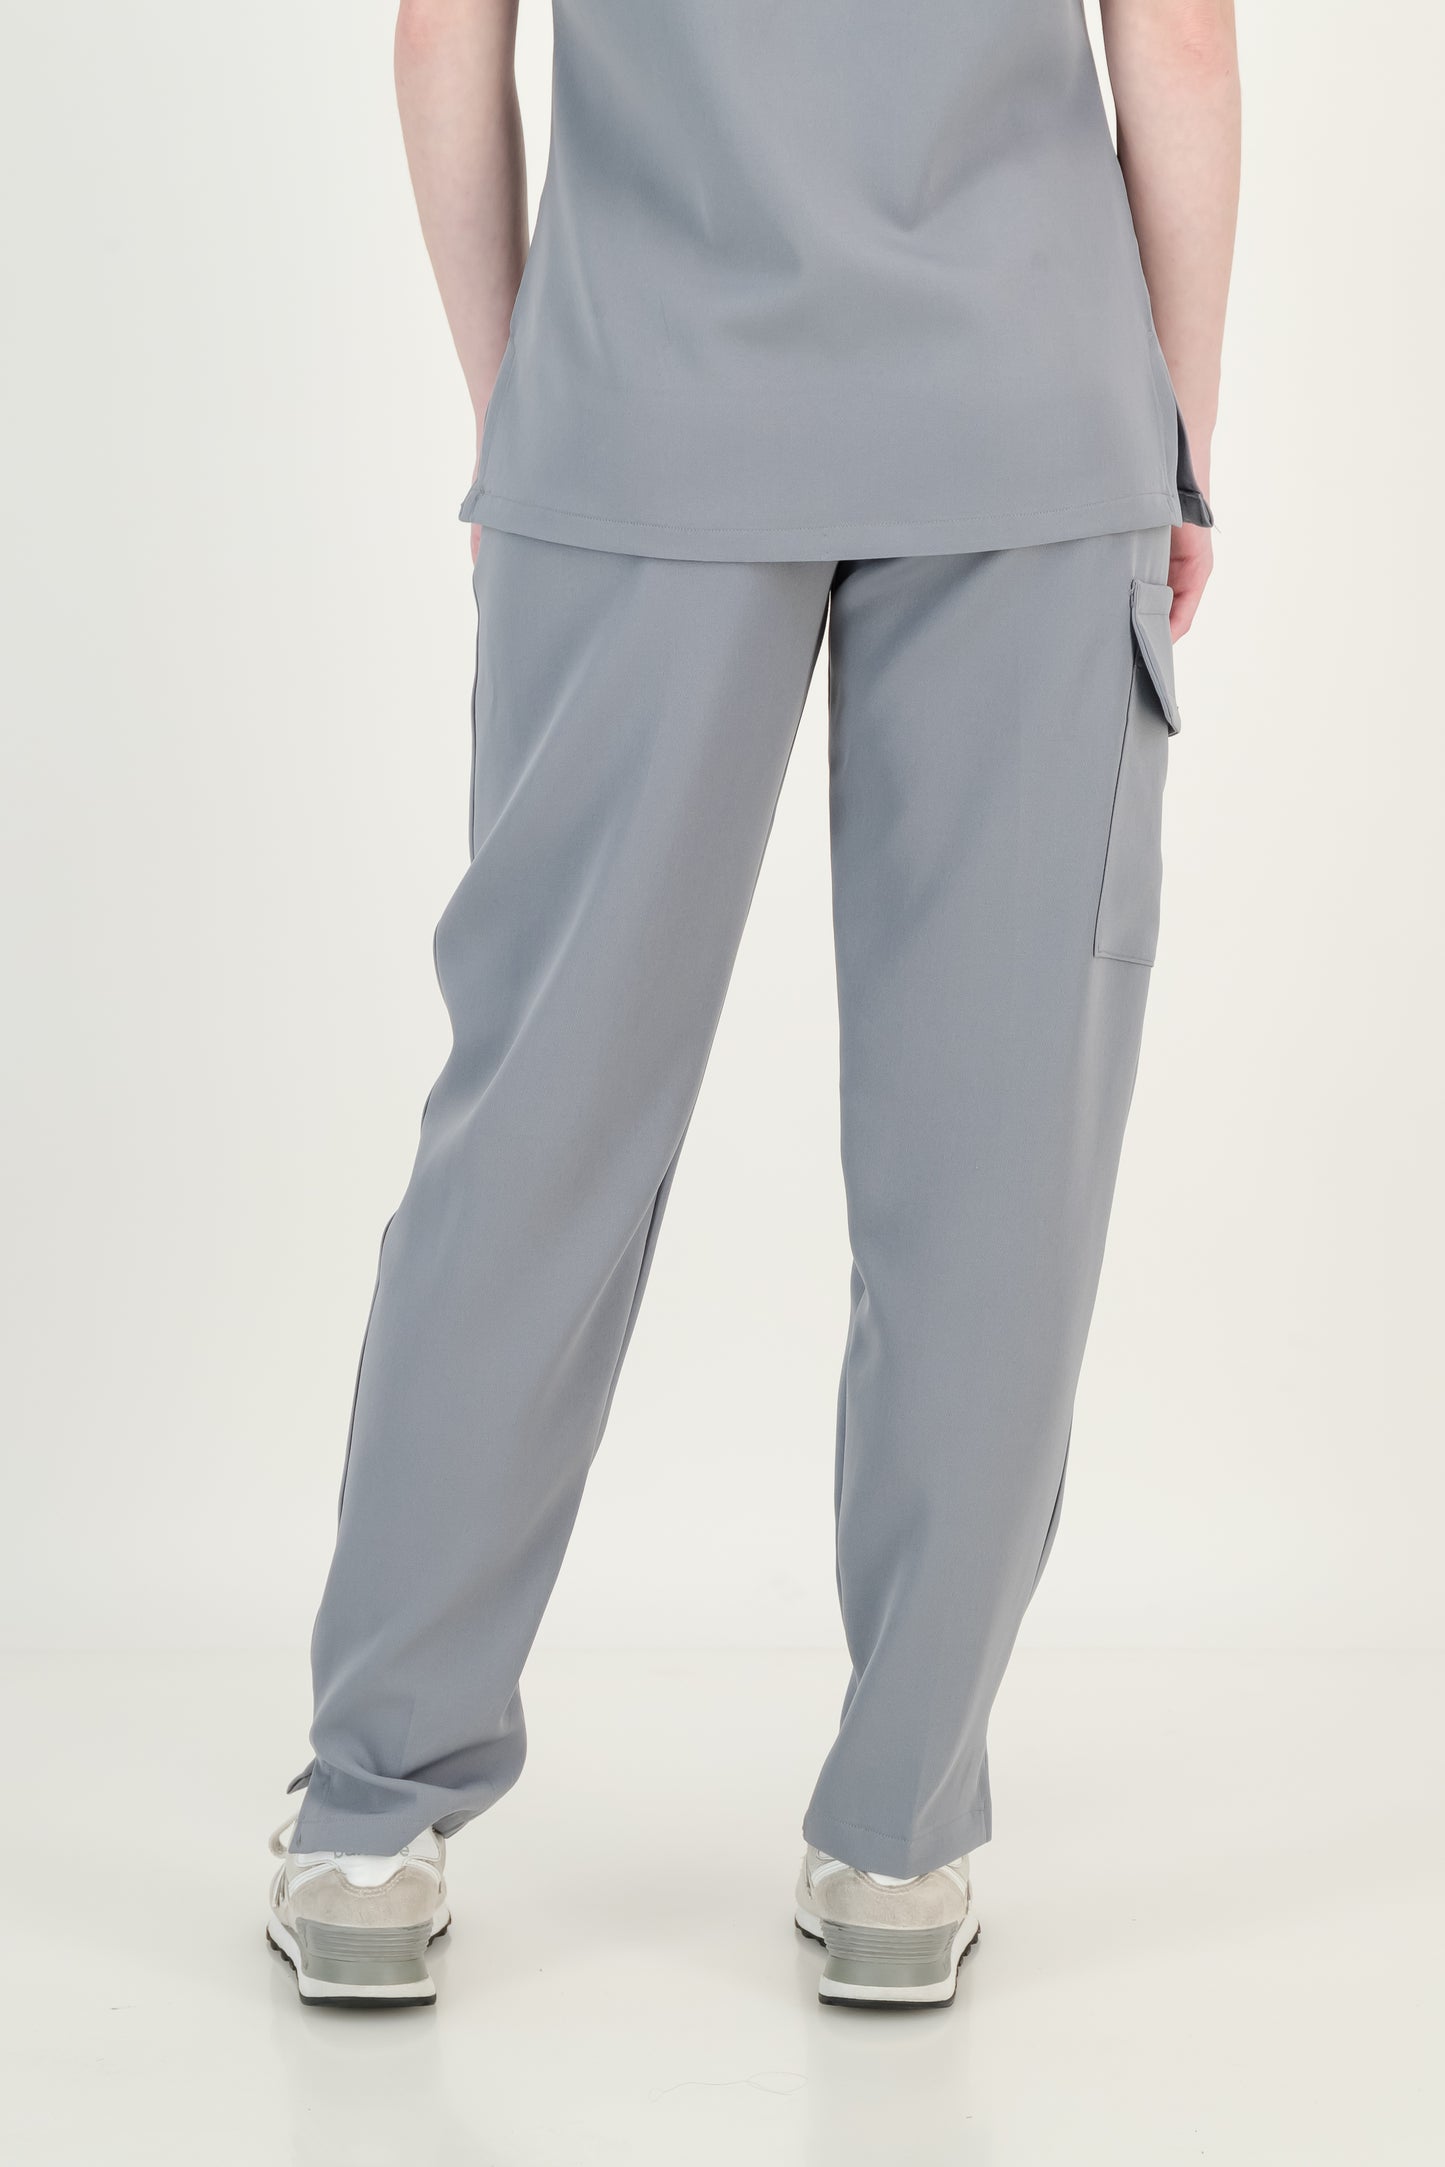 Women's Granite Grey Scrub Pants (NEW FABRIC)